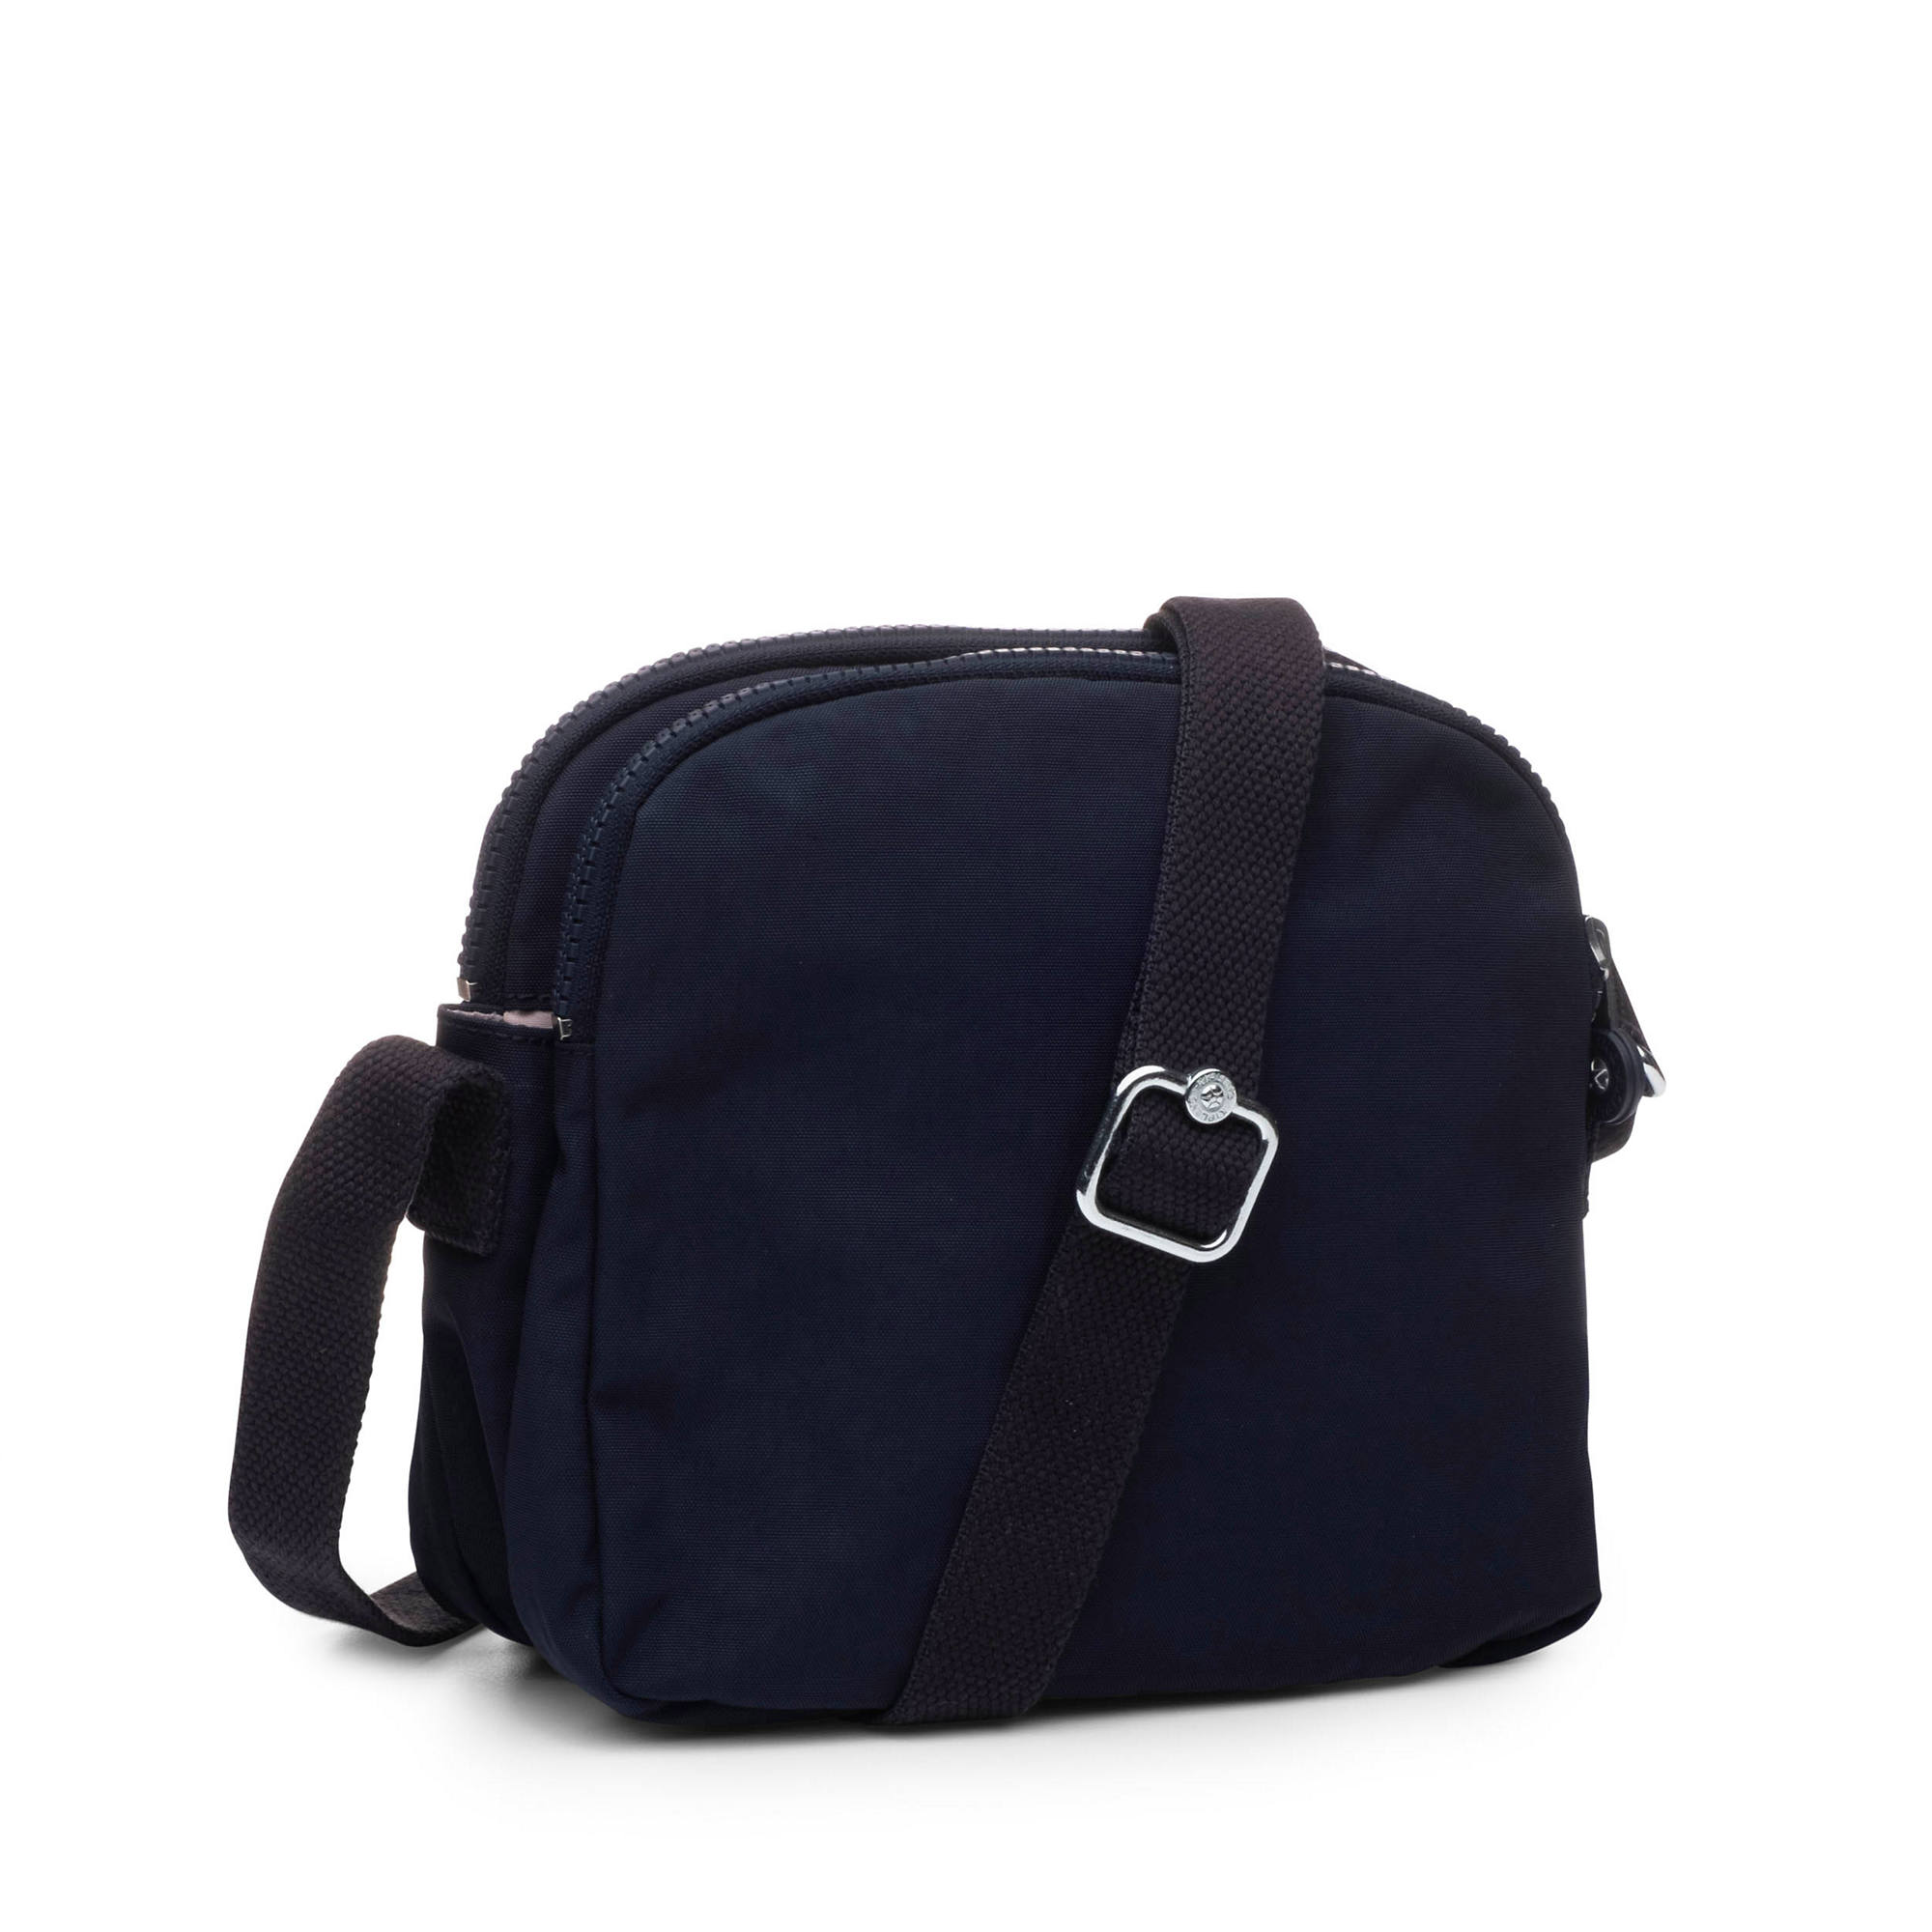 Kipling Keefe Crossbody Bag True Blue Tonal 882256403237 | eBay